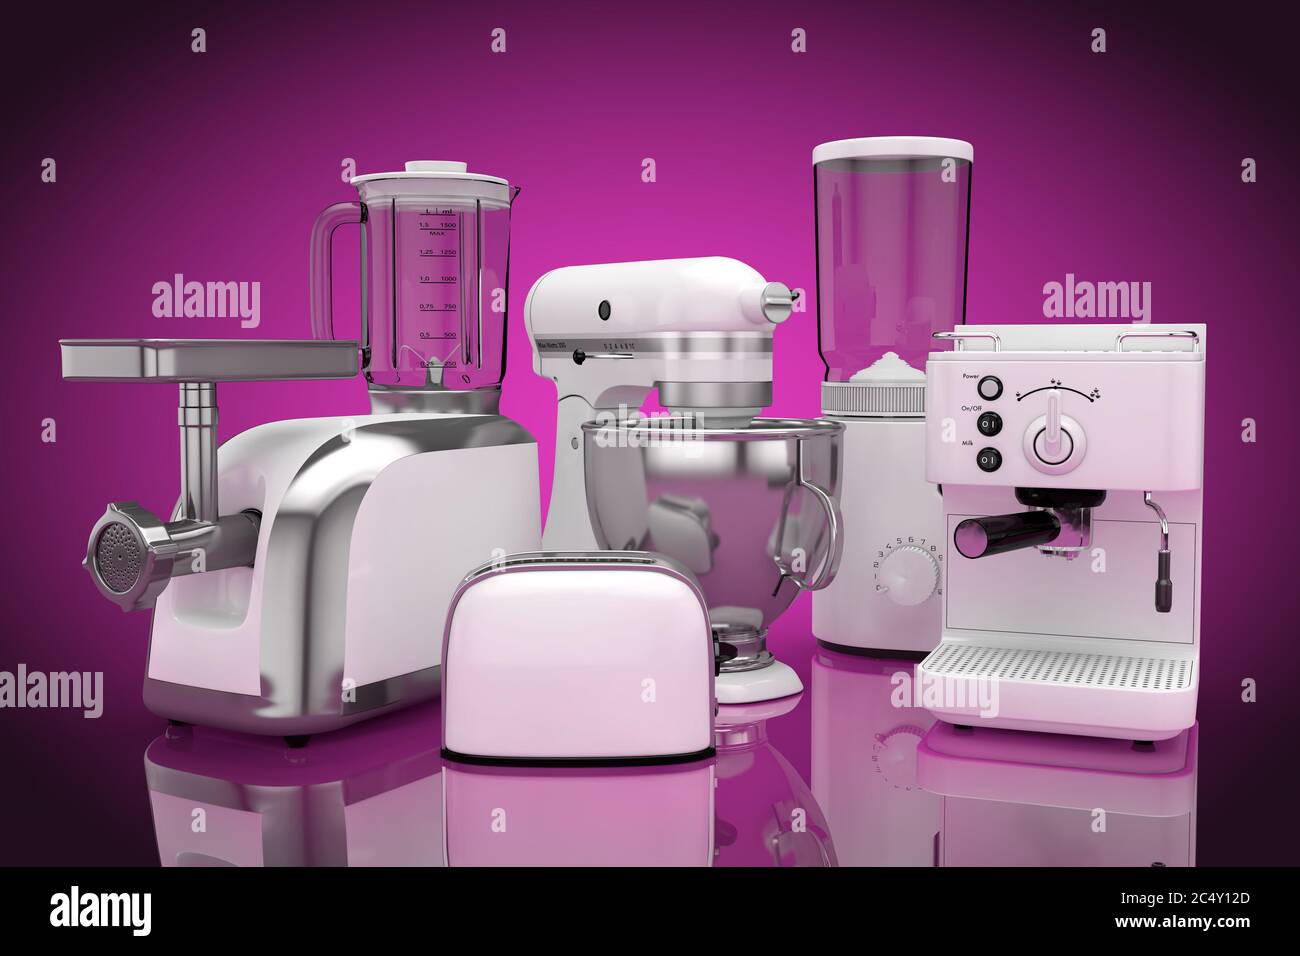 Kitchen Appliances Set. White Blender, Toaster, Coffee Machine